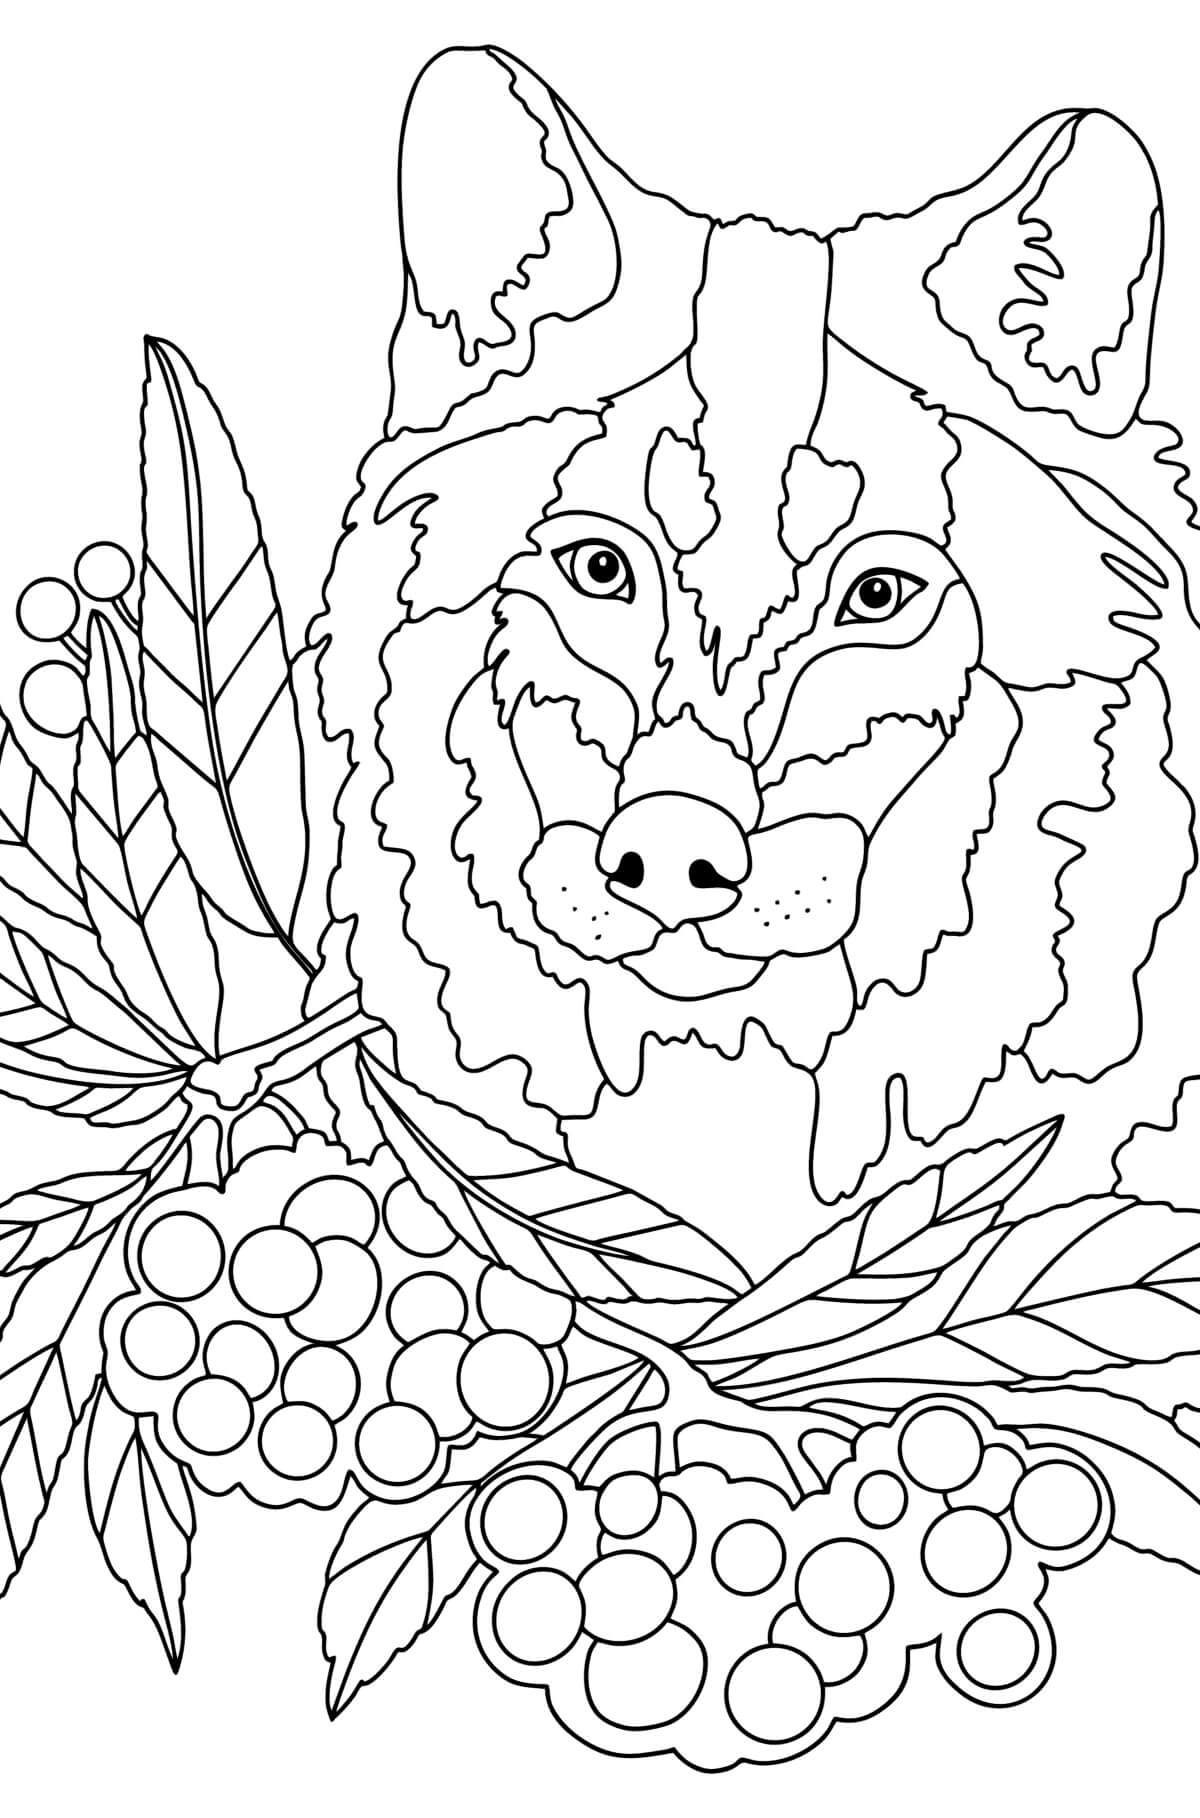 Mandala Wolf Coloring Page - Sheet 9 Mandalas